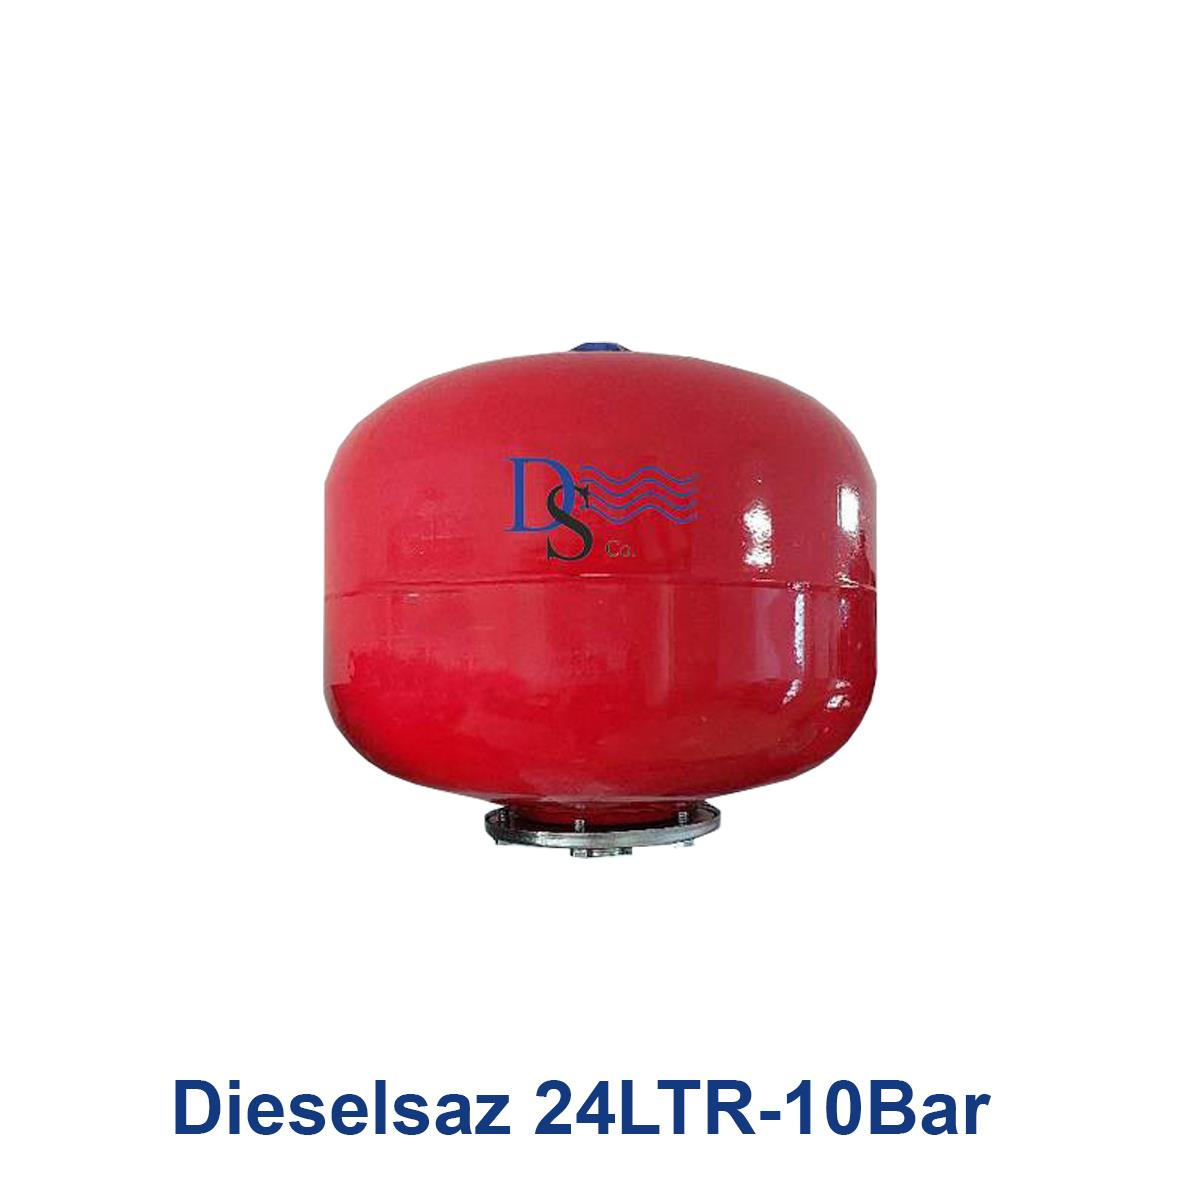 Dieselsaz-24LTR-10Bar